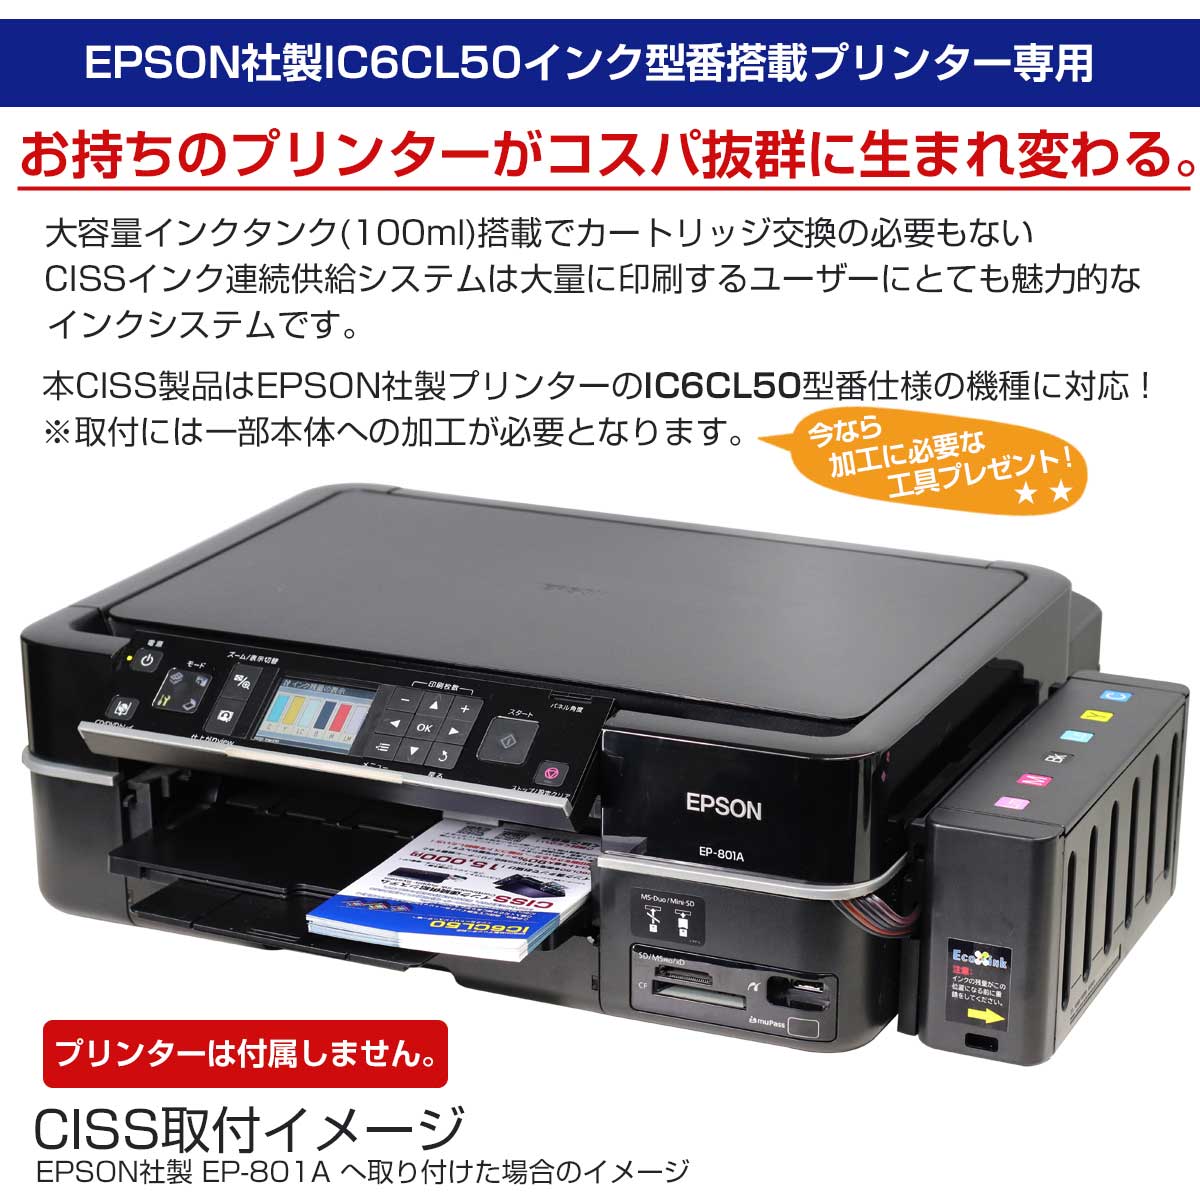 EPSON IC6CL50 - オフィス用品